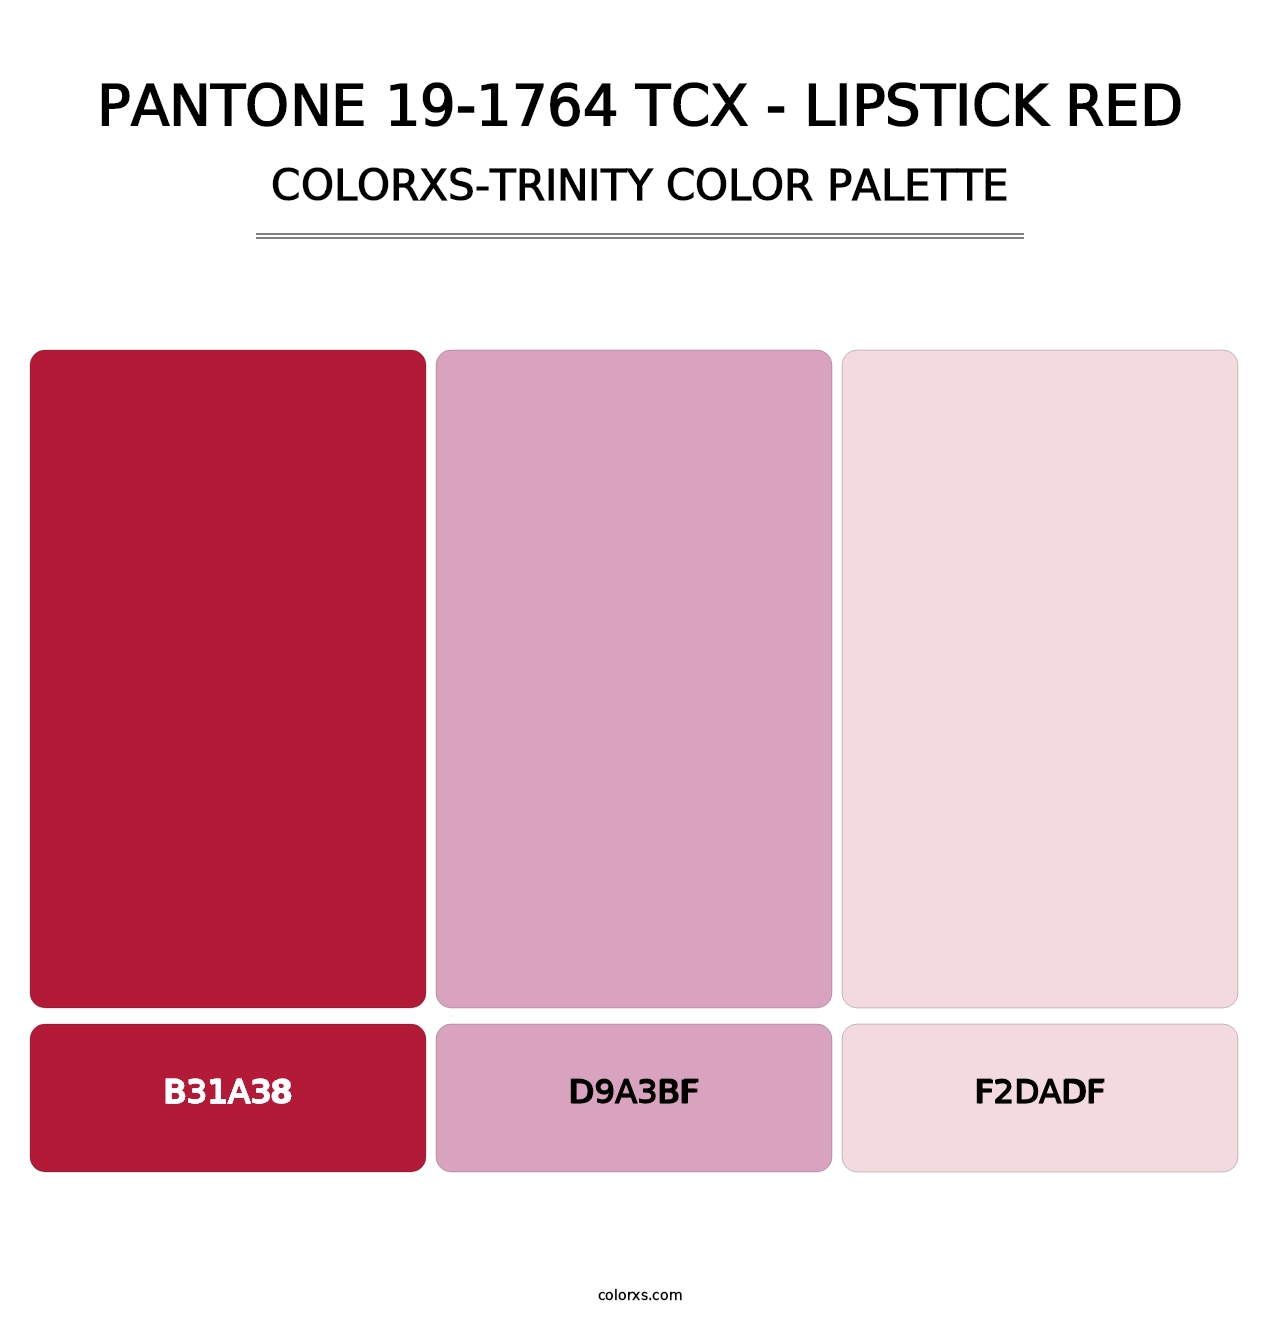 PANTONE 19-1764 TCX - Lipstick Red - Colorxs Trinity Palette